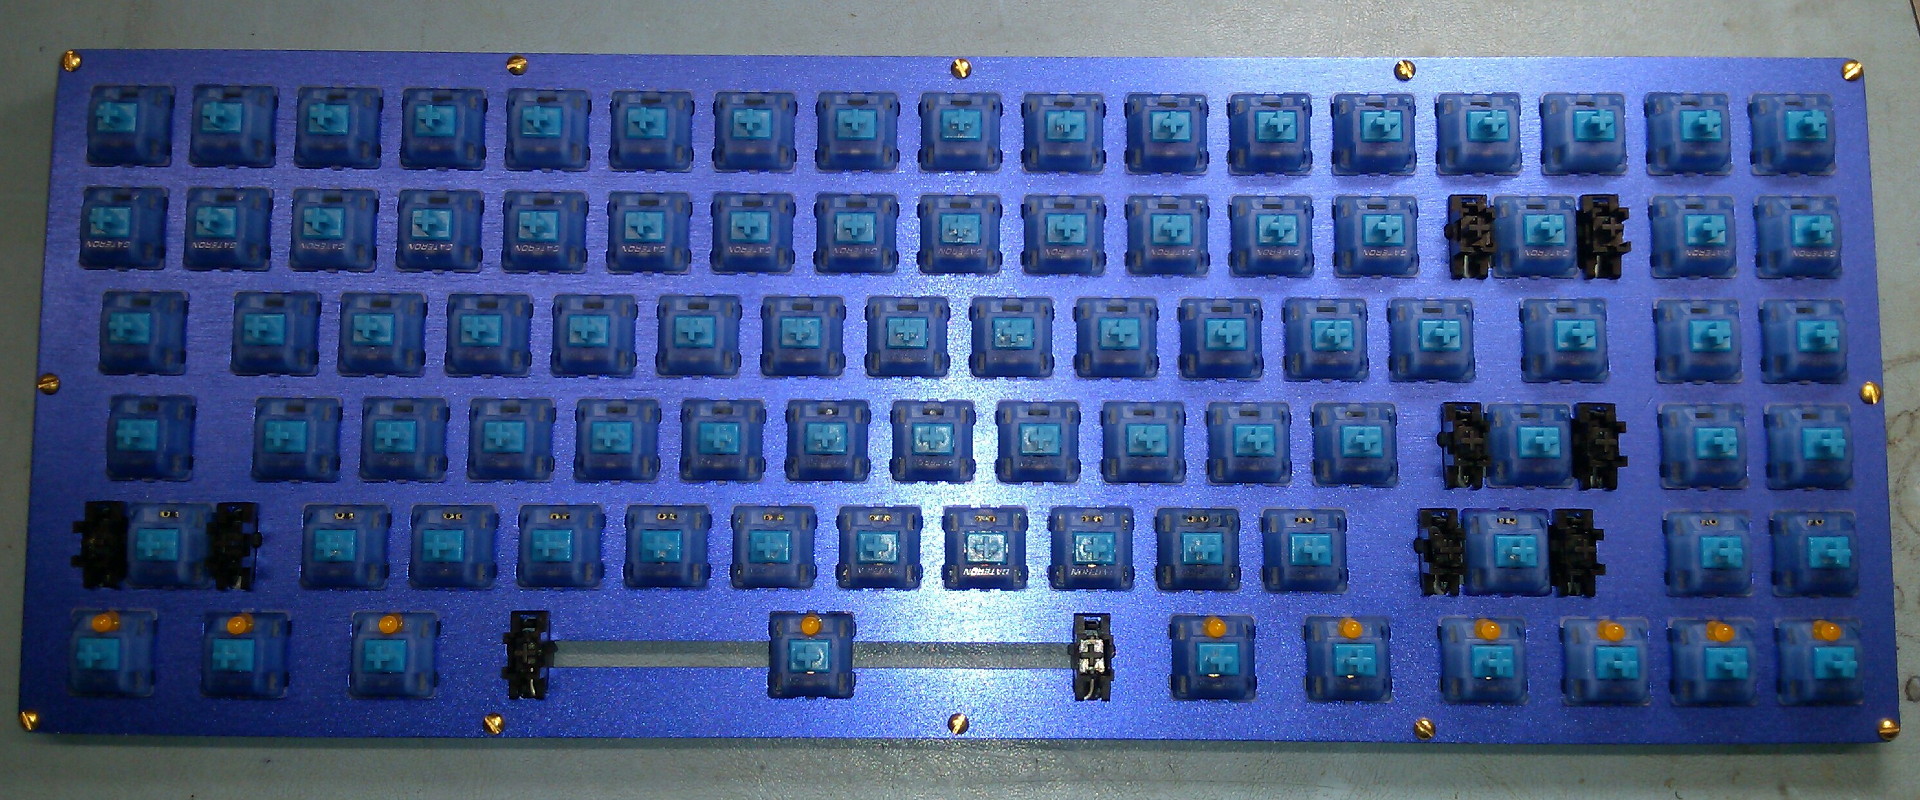 Keyboard76_DangerZoneSIP.jpg